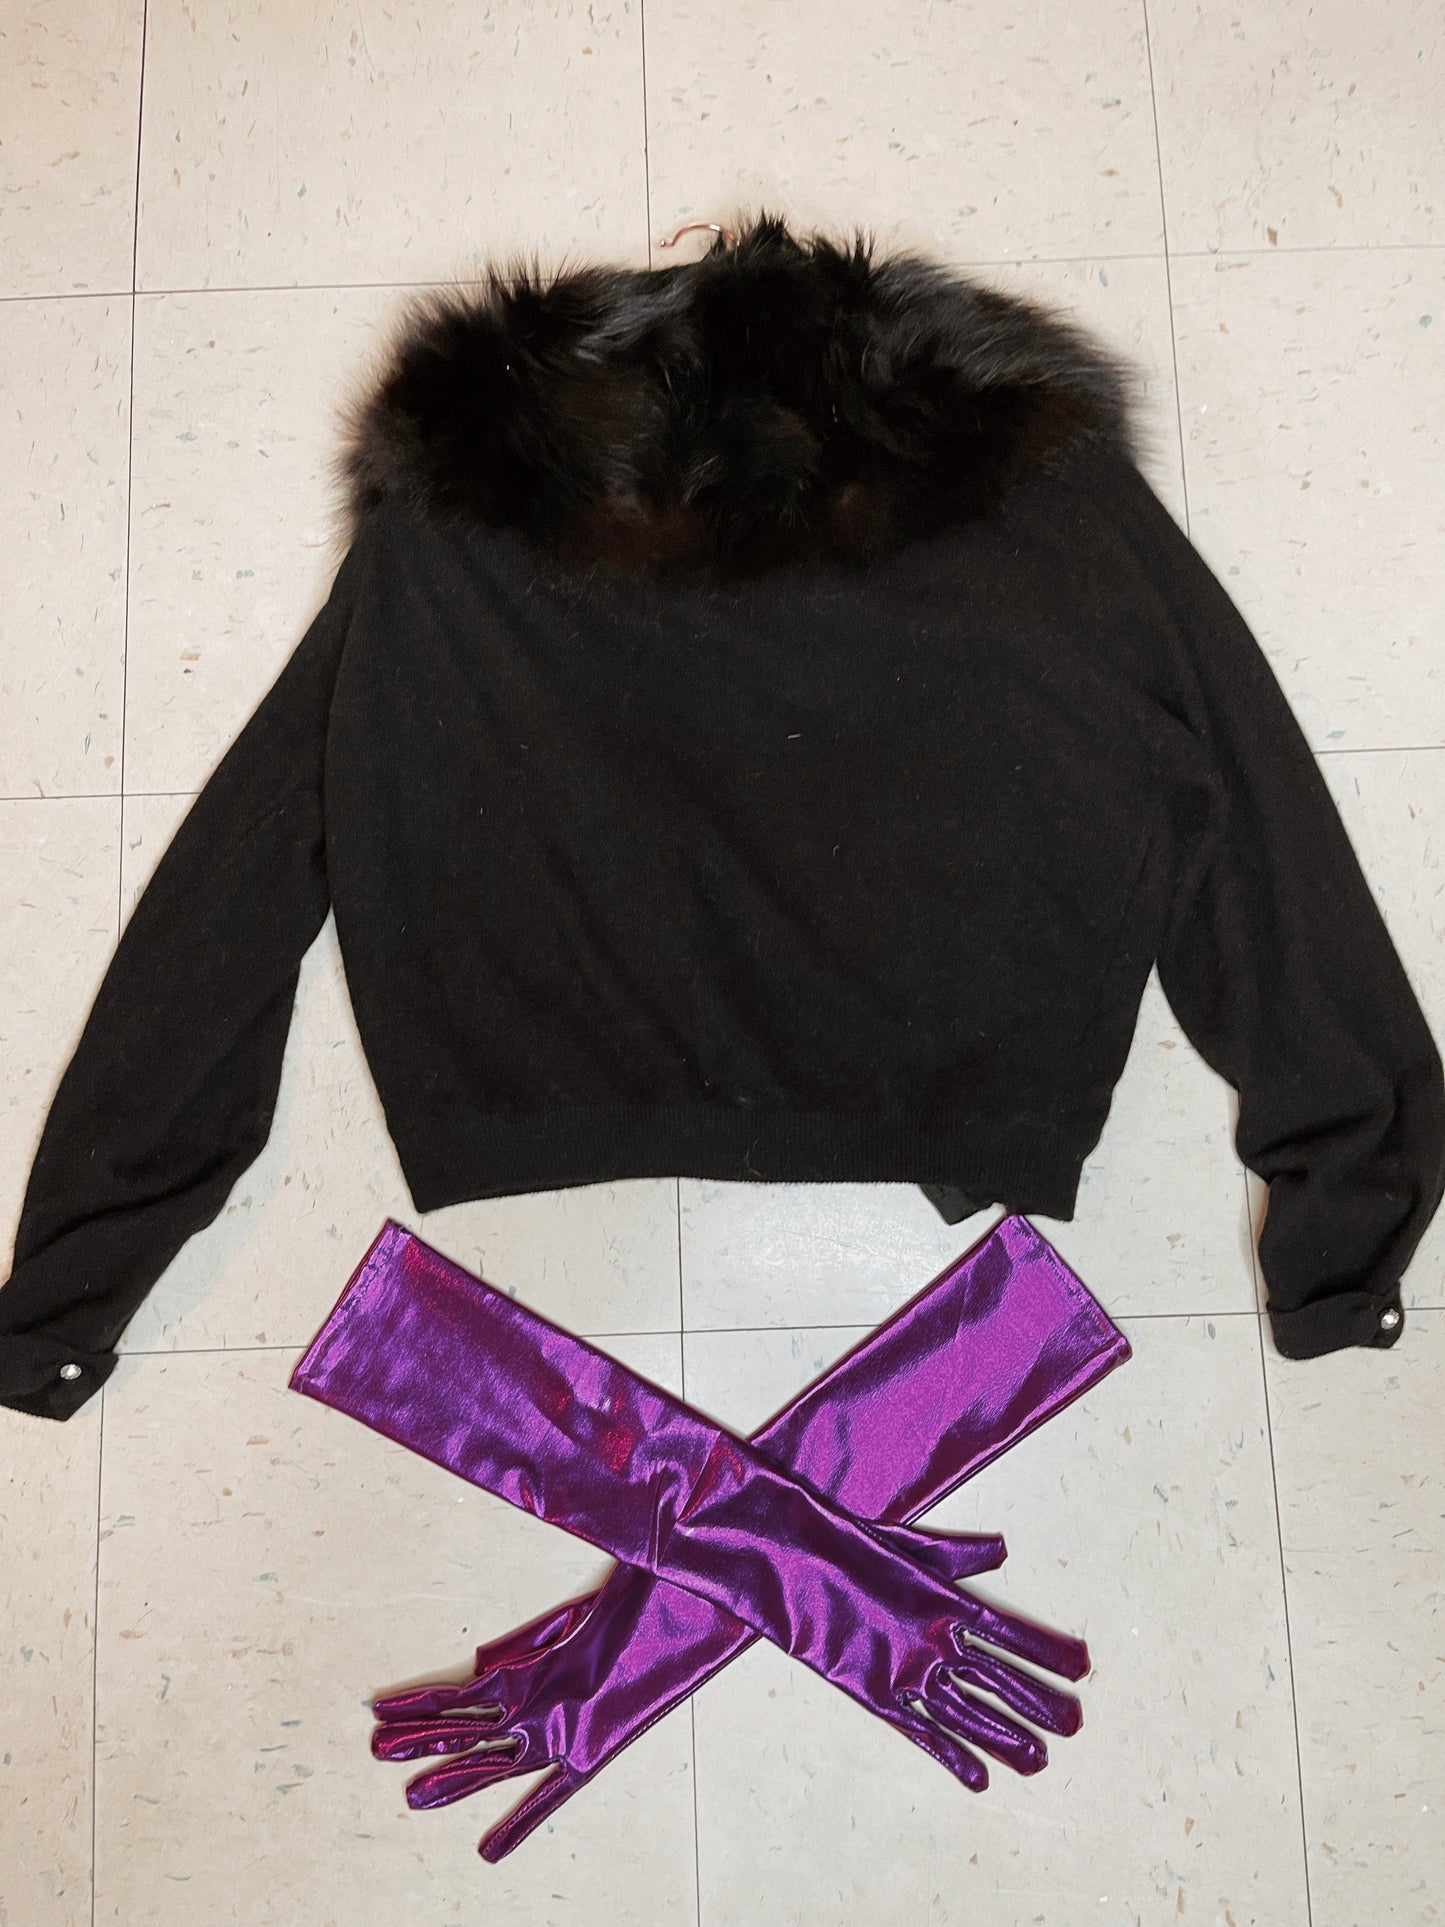 Vintage 50s Fur Black Rhinestone Closure Sweater Fits Sizes XS-M